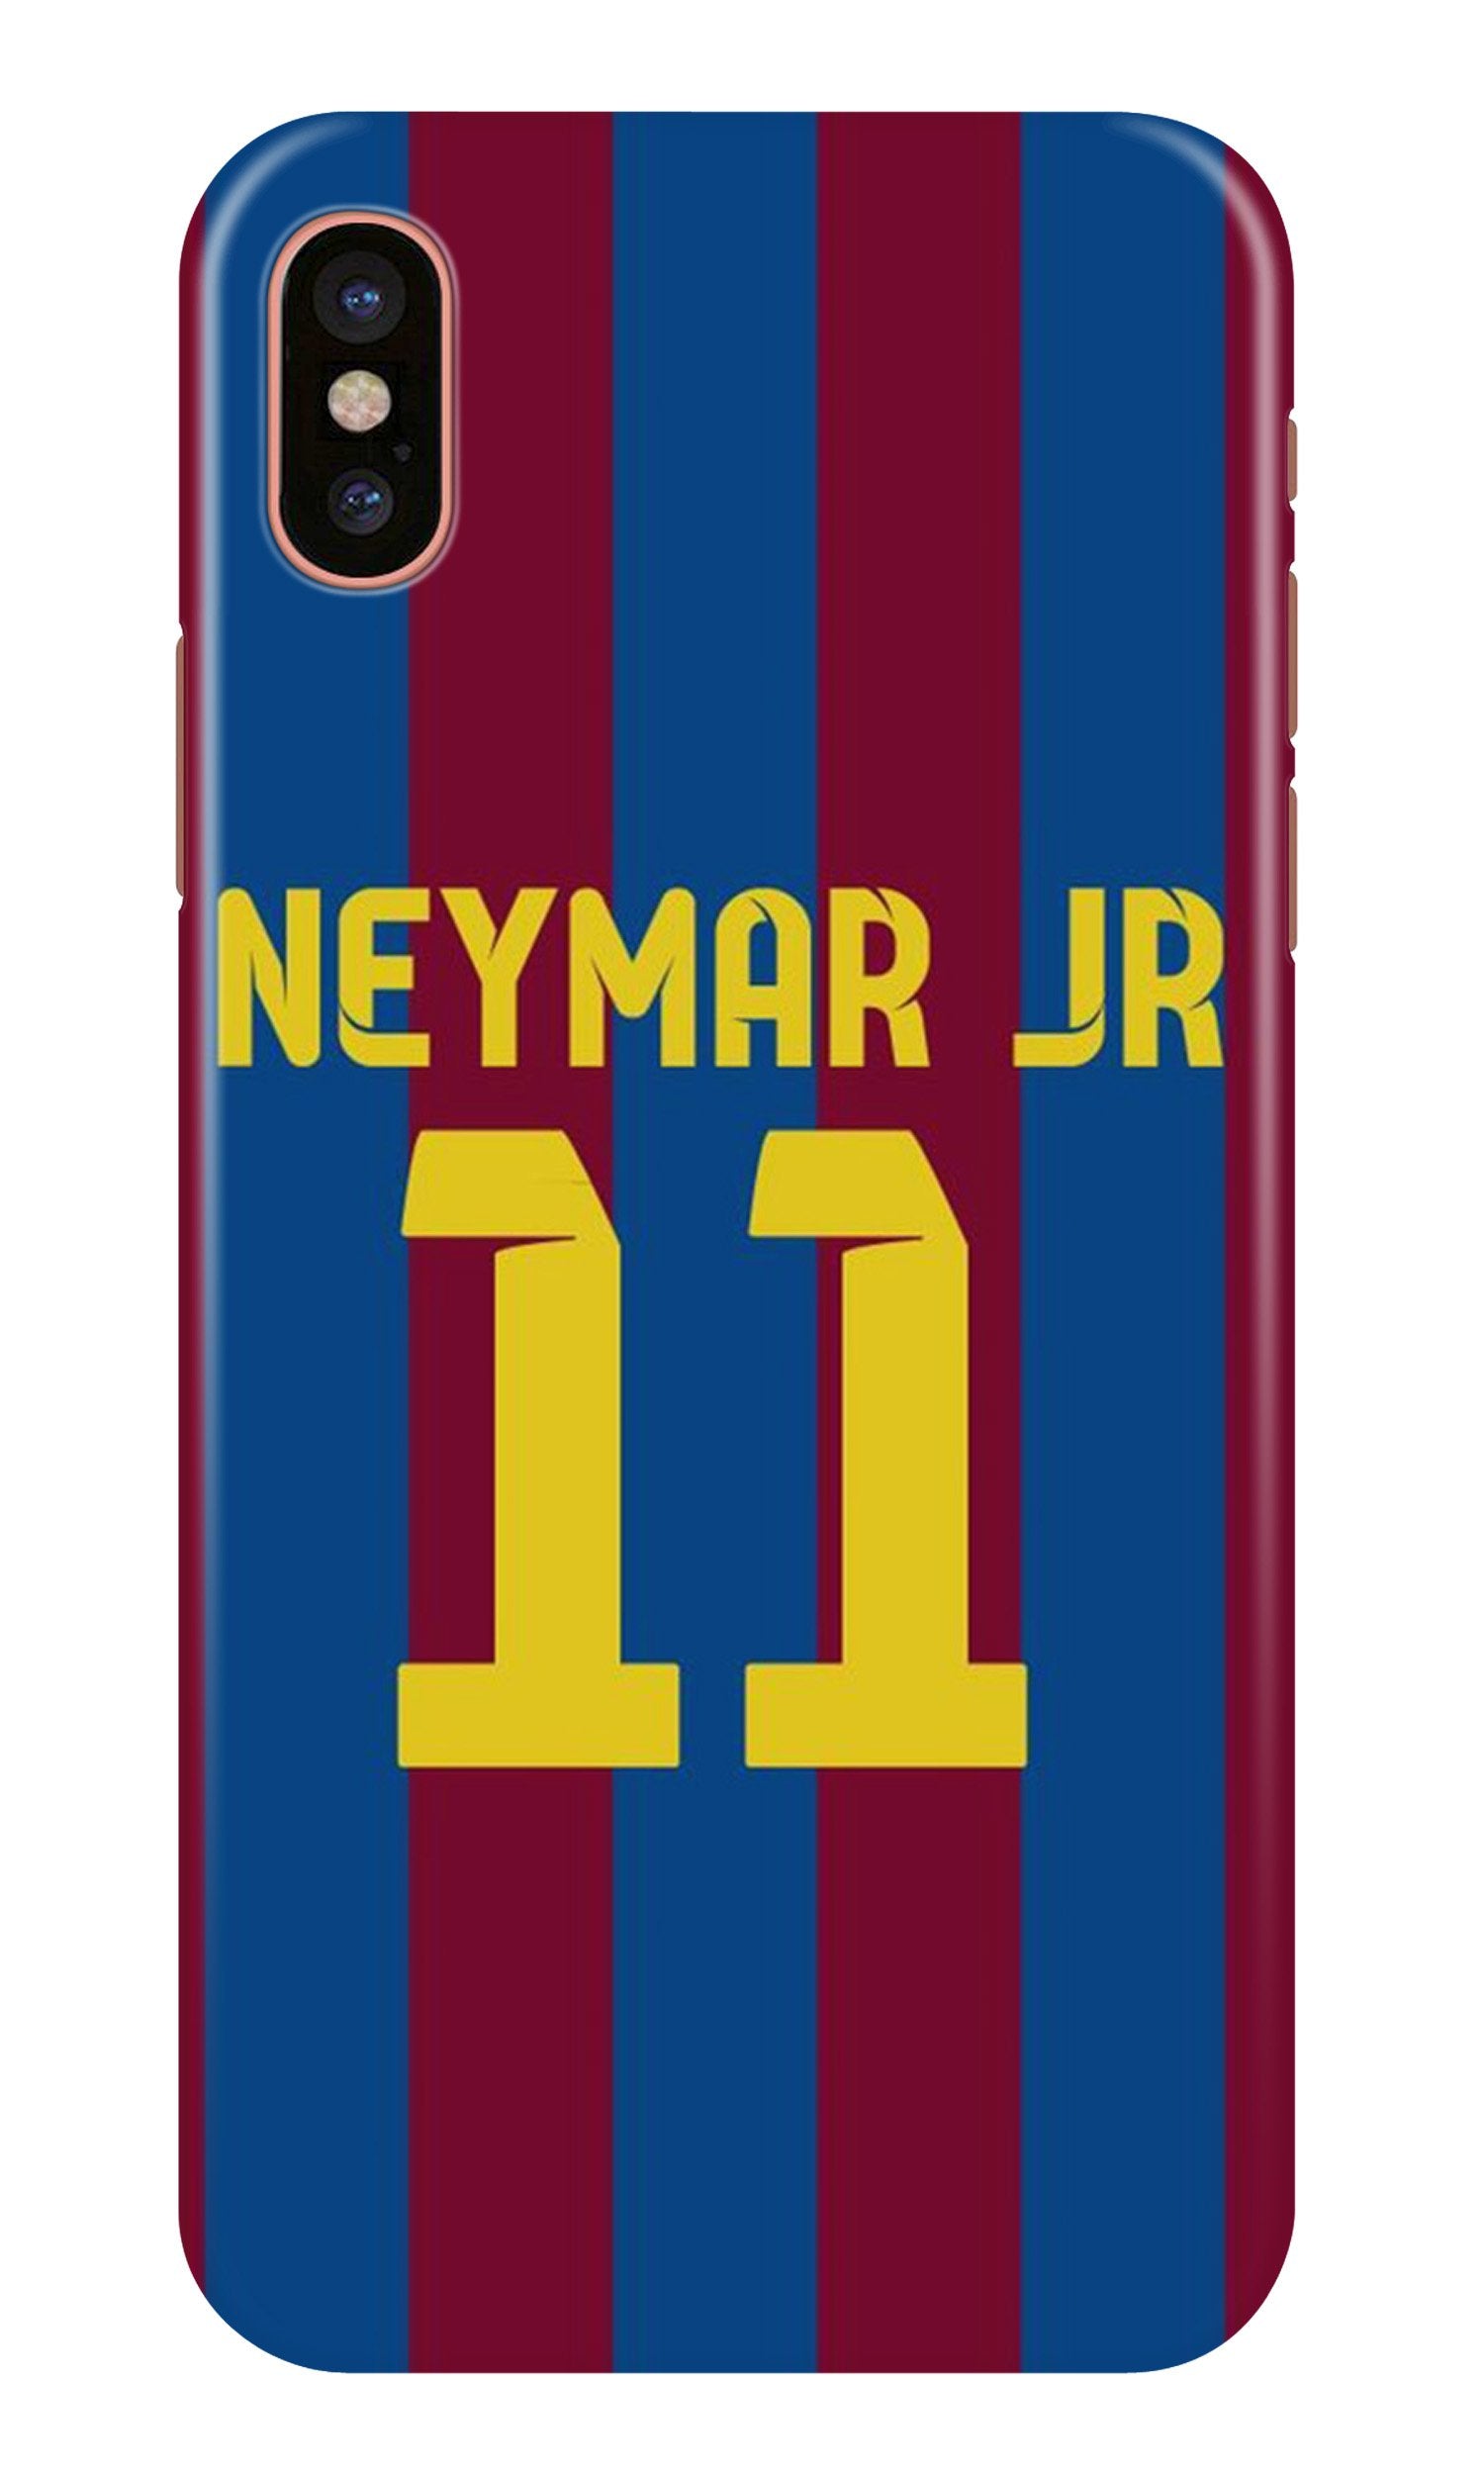 Neymar Jr Case for iPhone X(Design - 162)